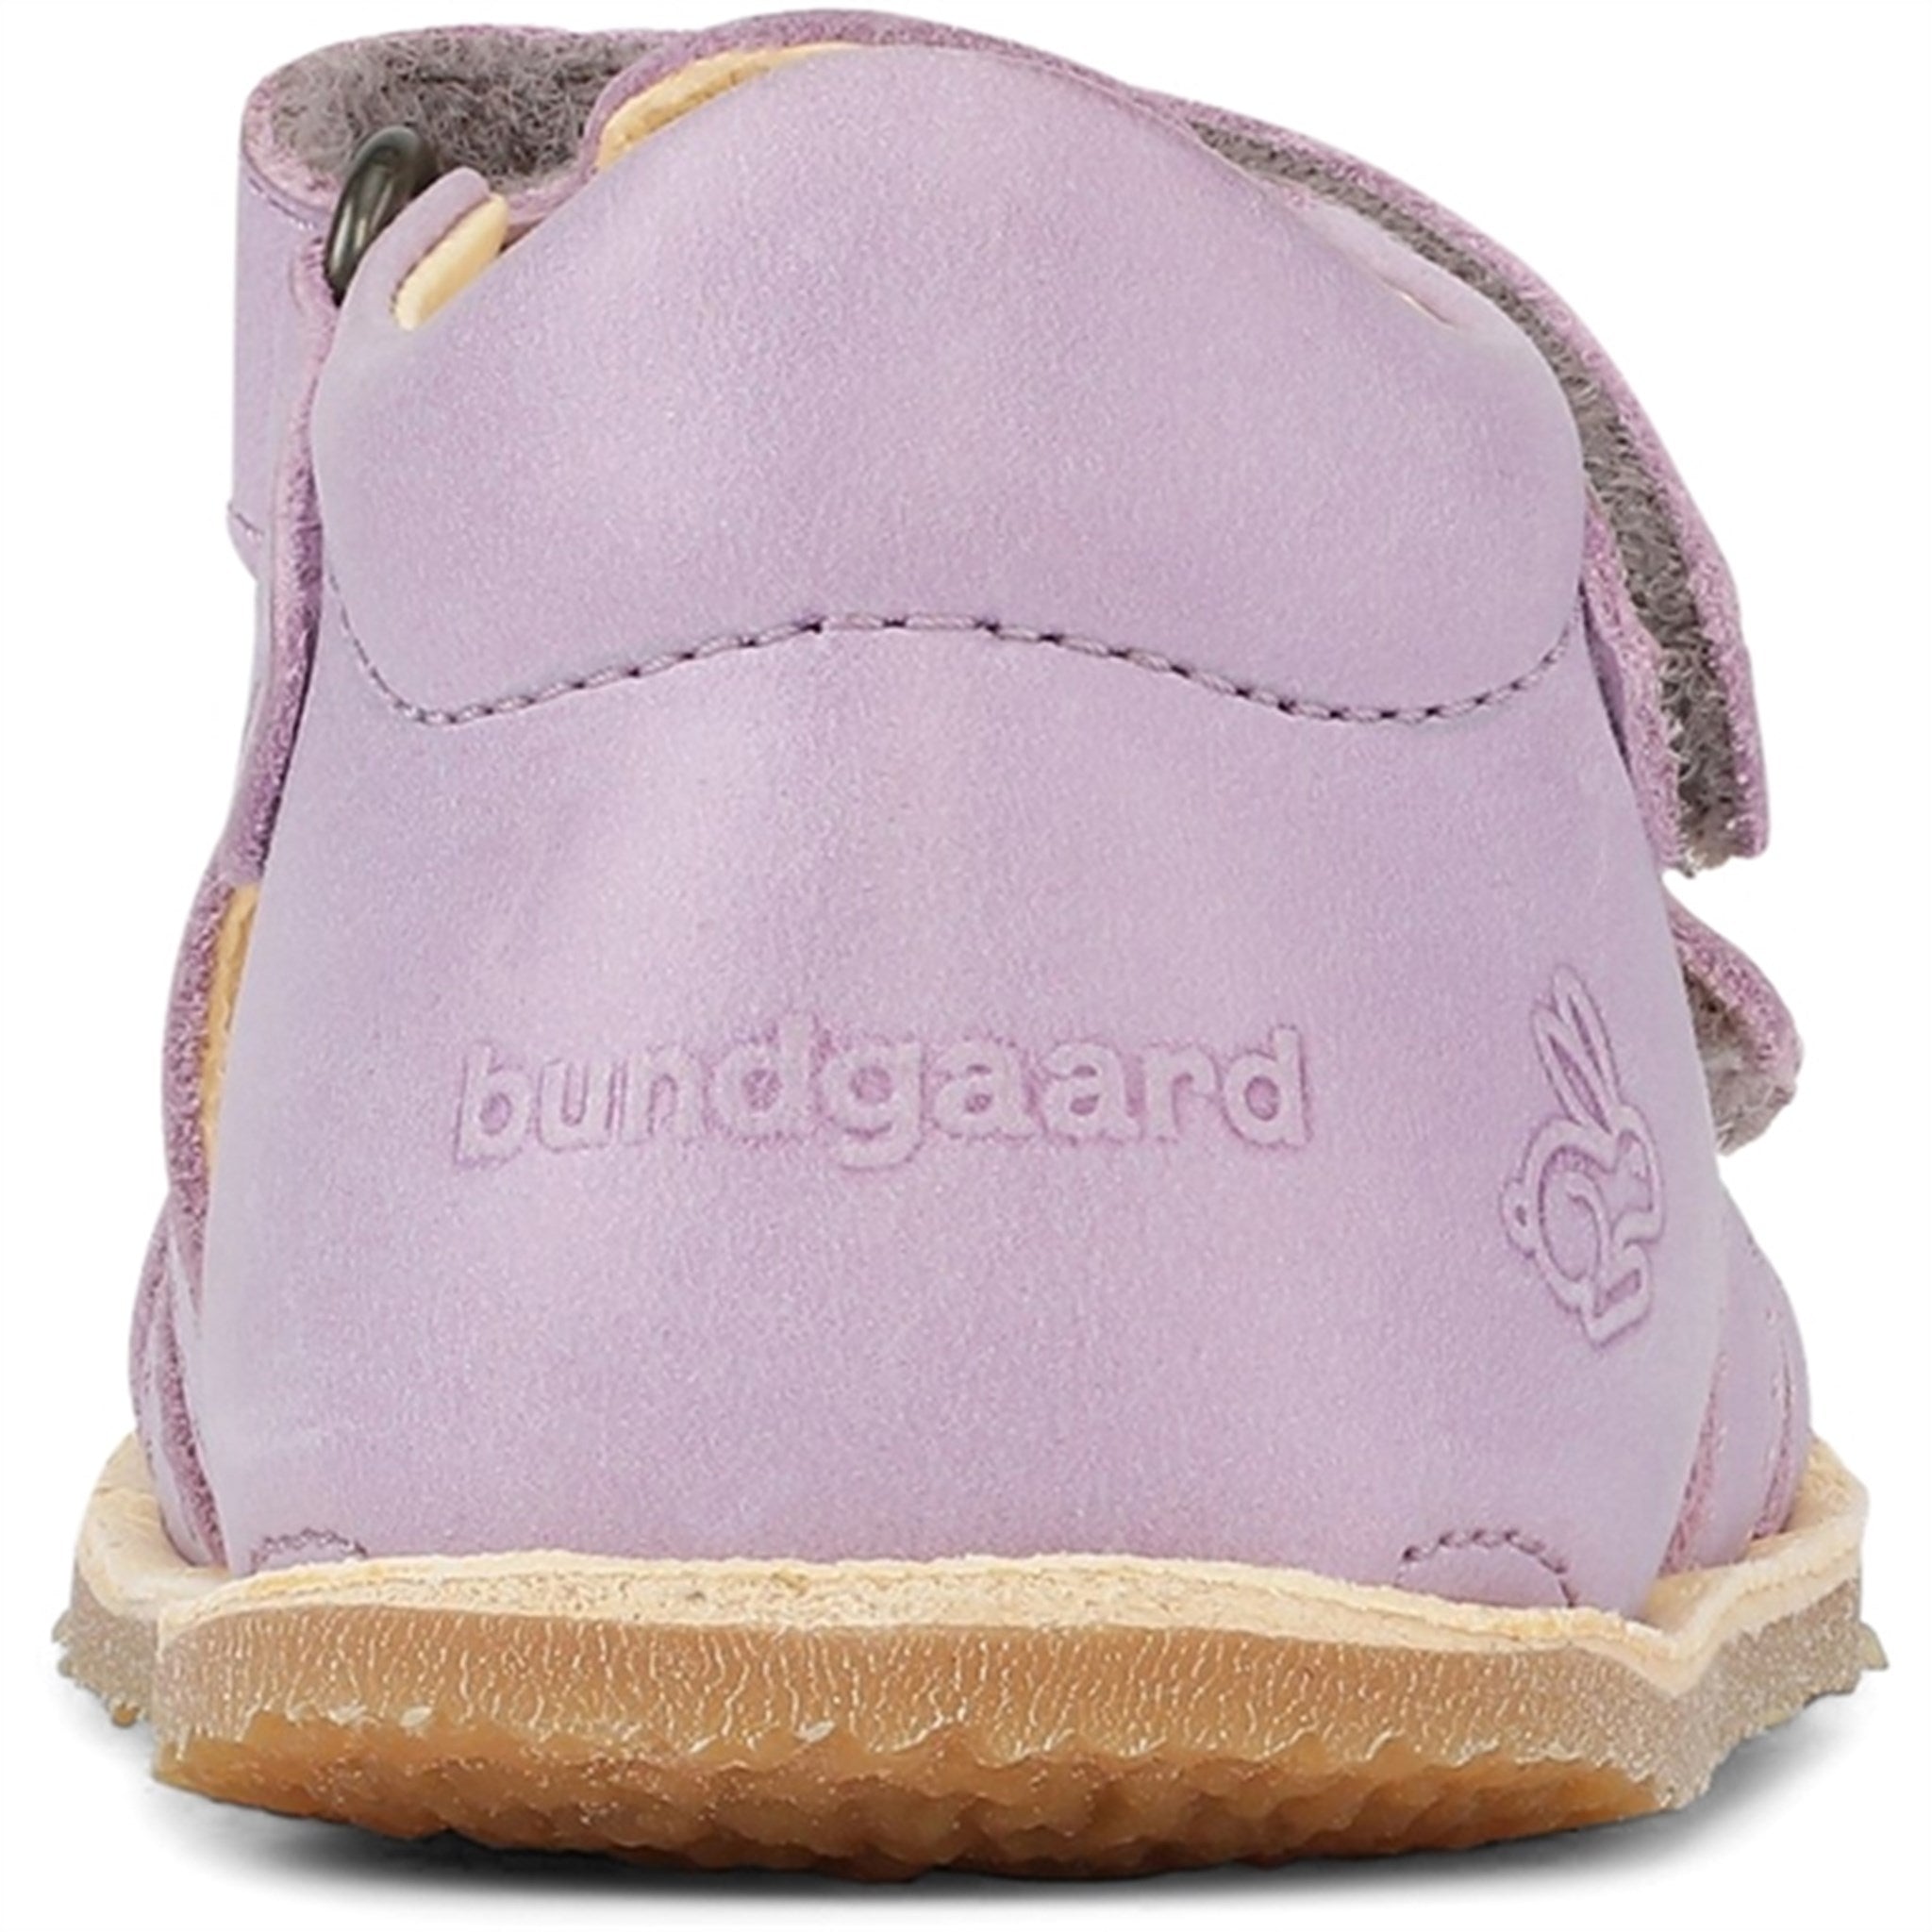 Bundgaard Sebastian II Sandal Lilac WS 3